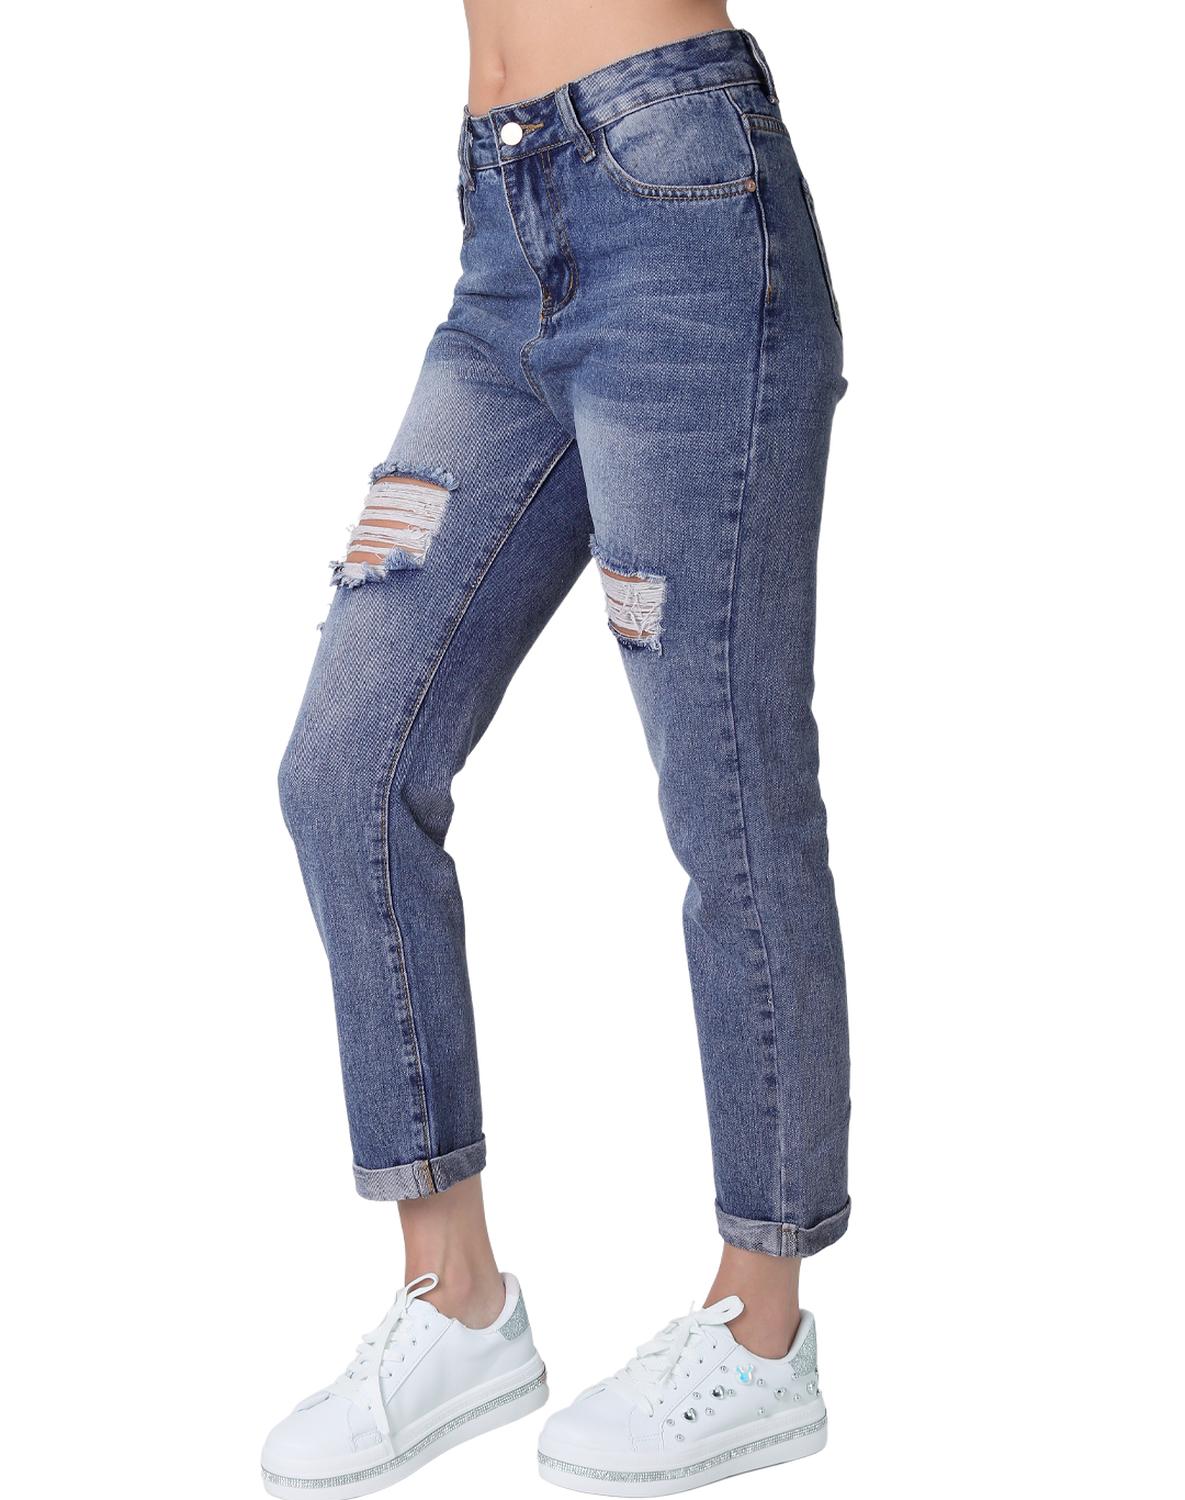 Jeans Moda Recto Mujer Azul Capricho 76804803